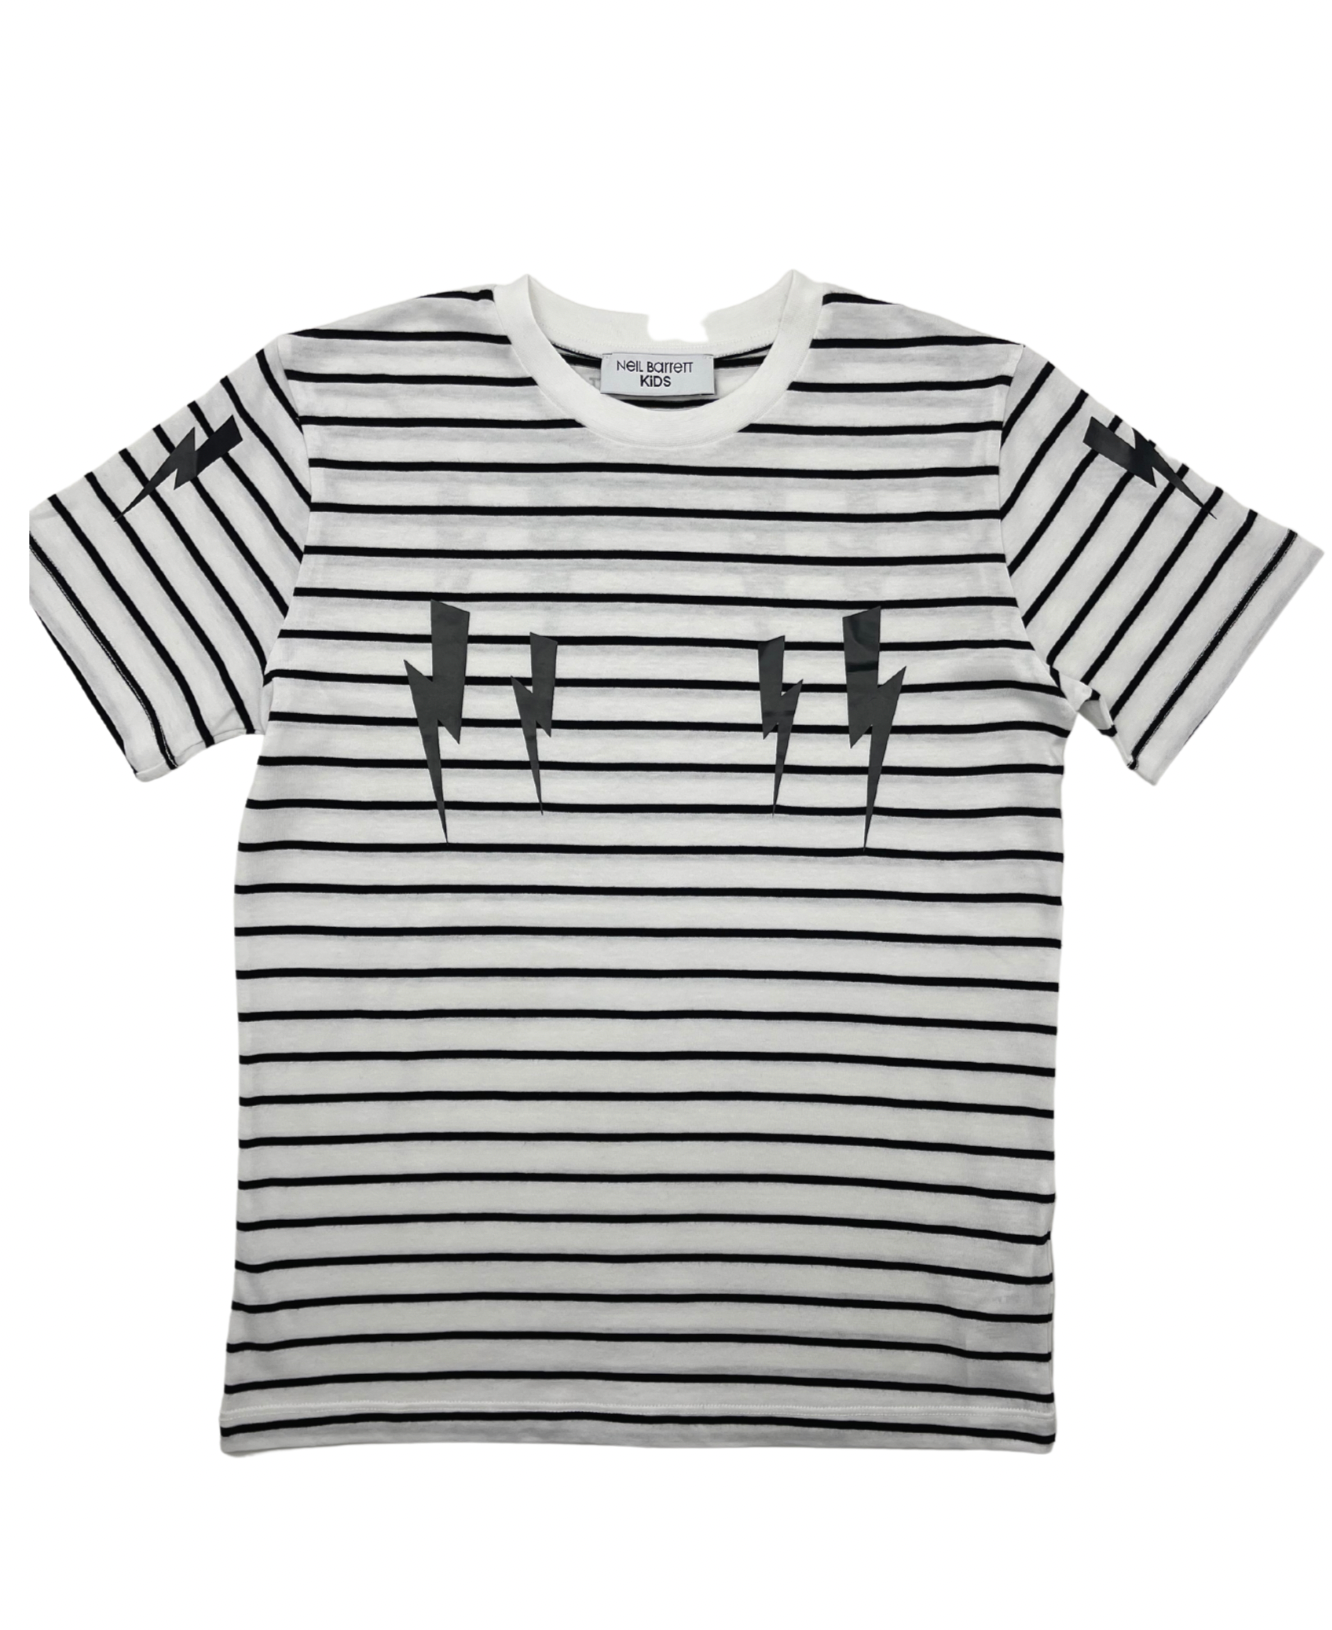 NEIL BARRETT - Striped lightning bolt t-shirt - 10 years old